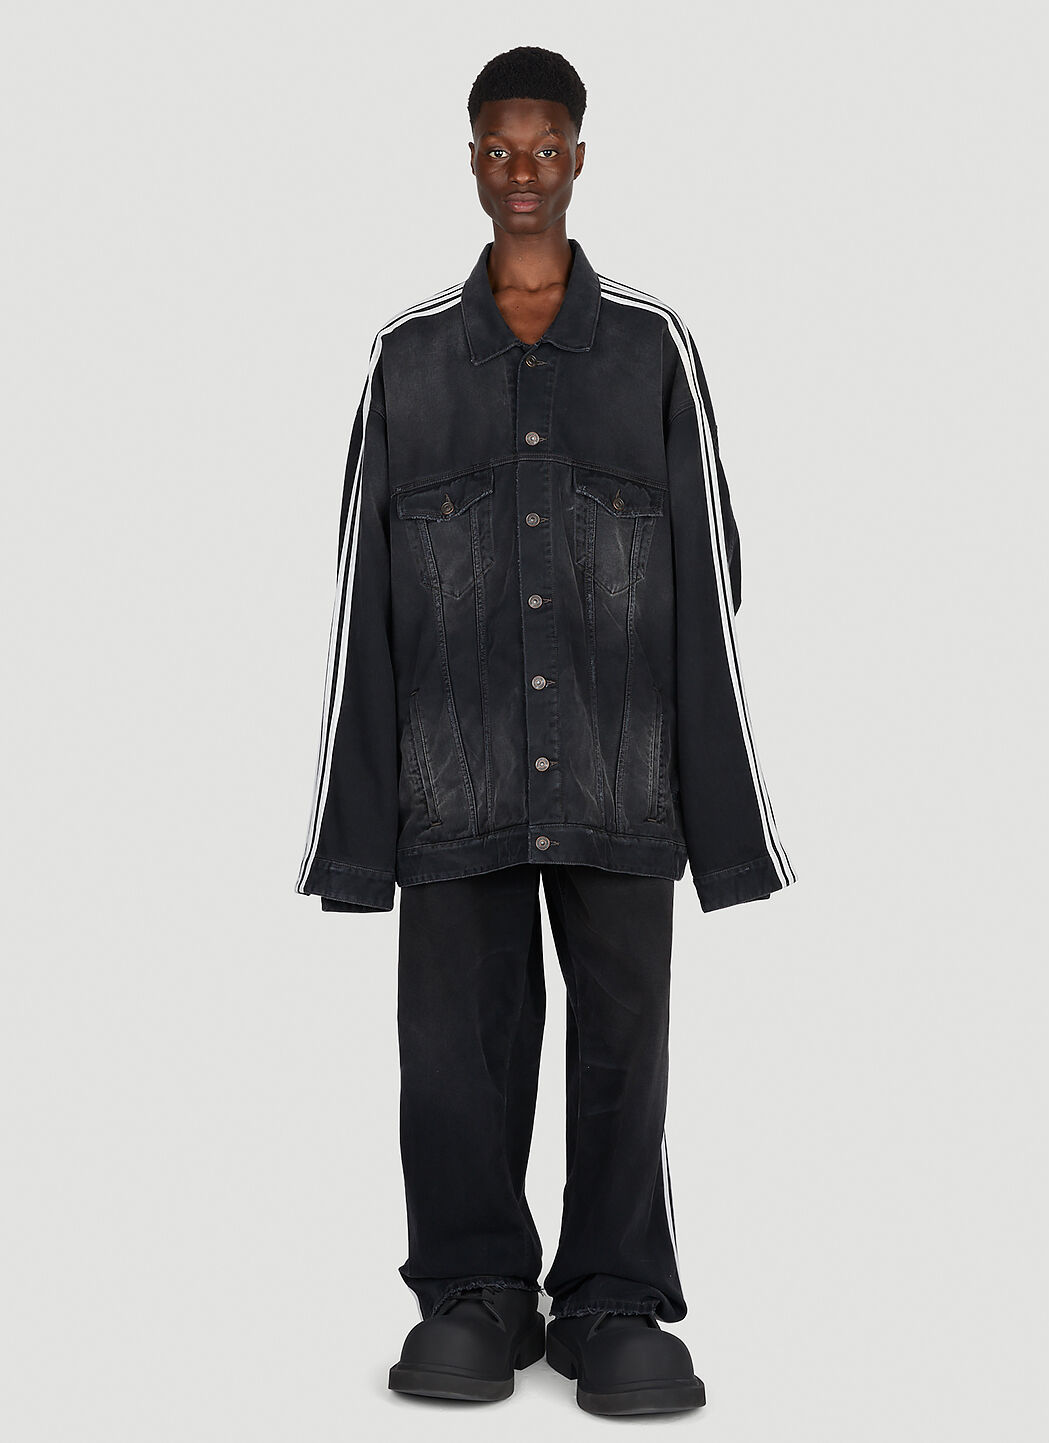 Balenciaga x adidas Men's Baggy Jeans in Black | LN-CC®